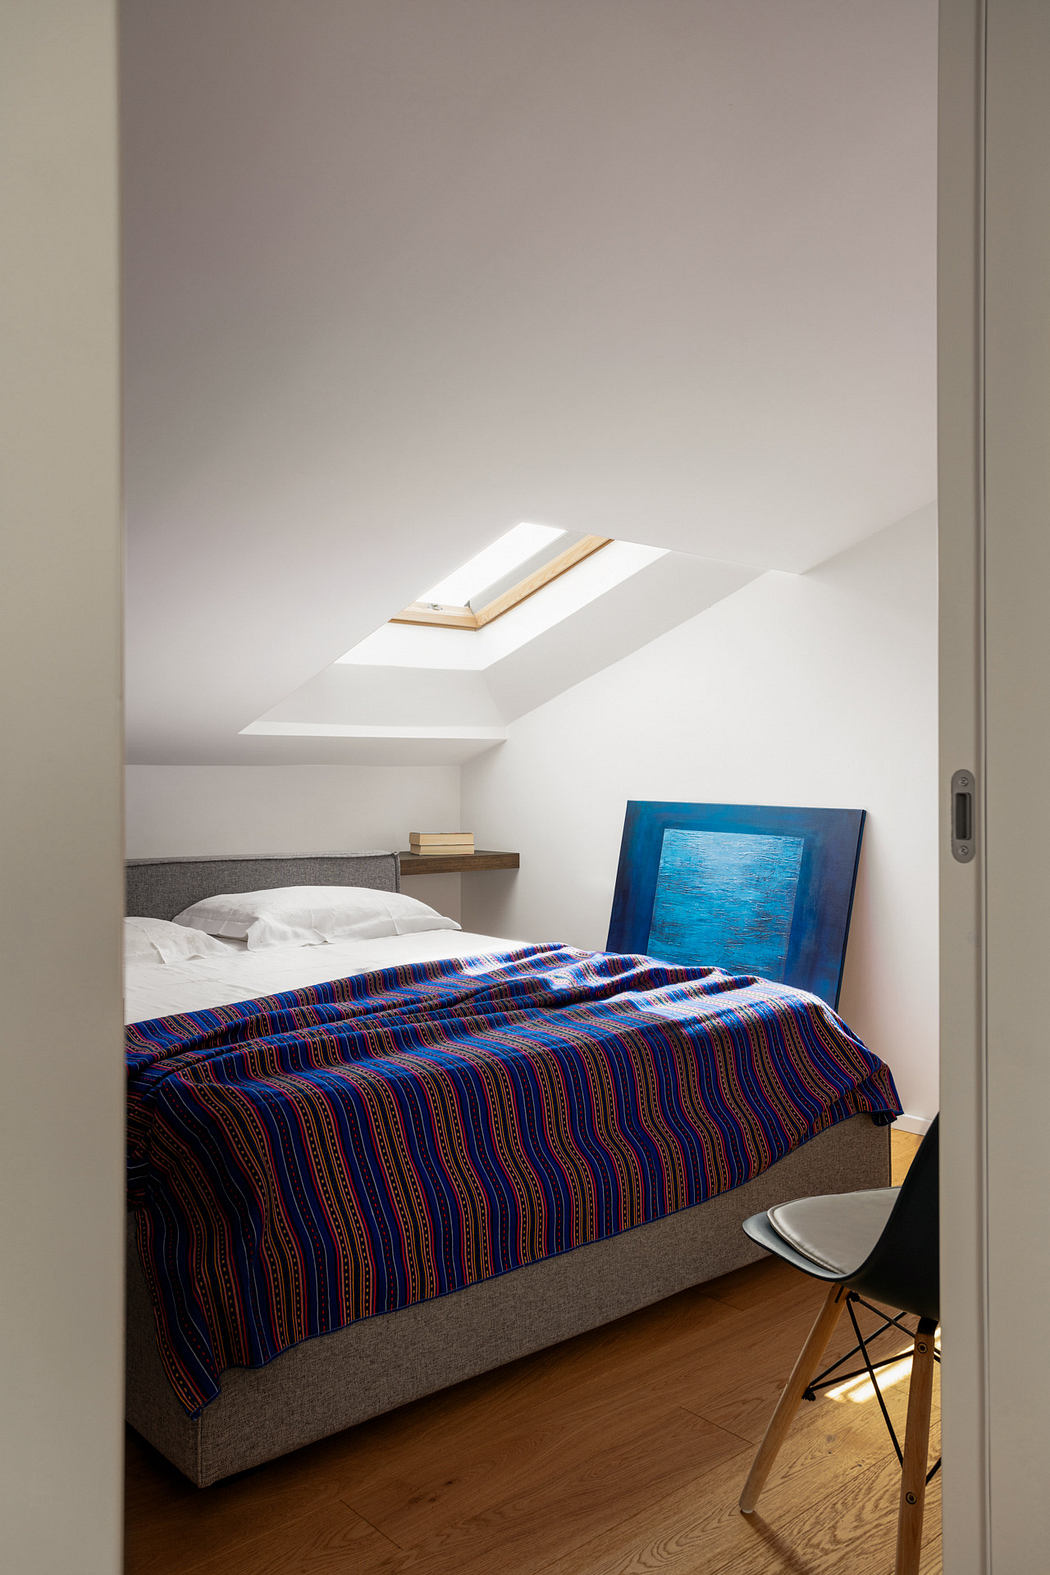 Modern attic bedroom with skylight and minimalist decor.